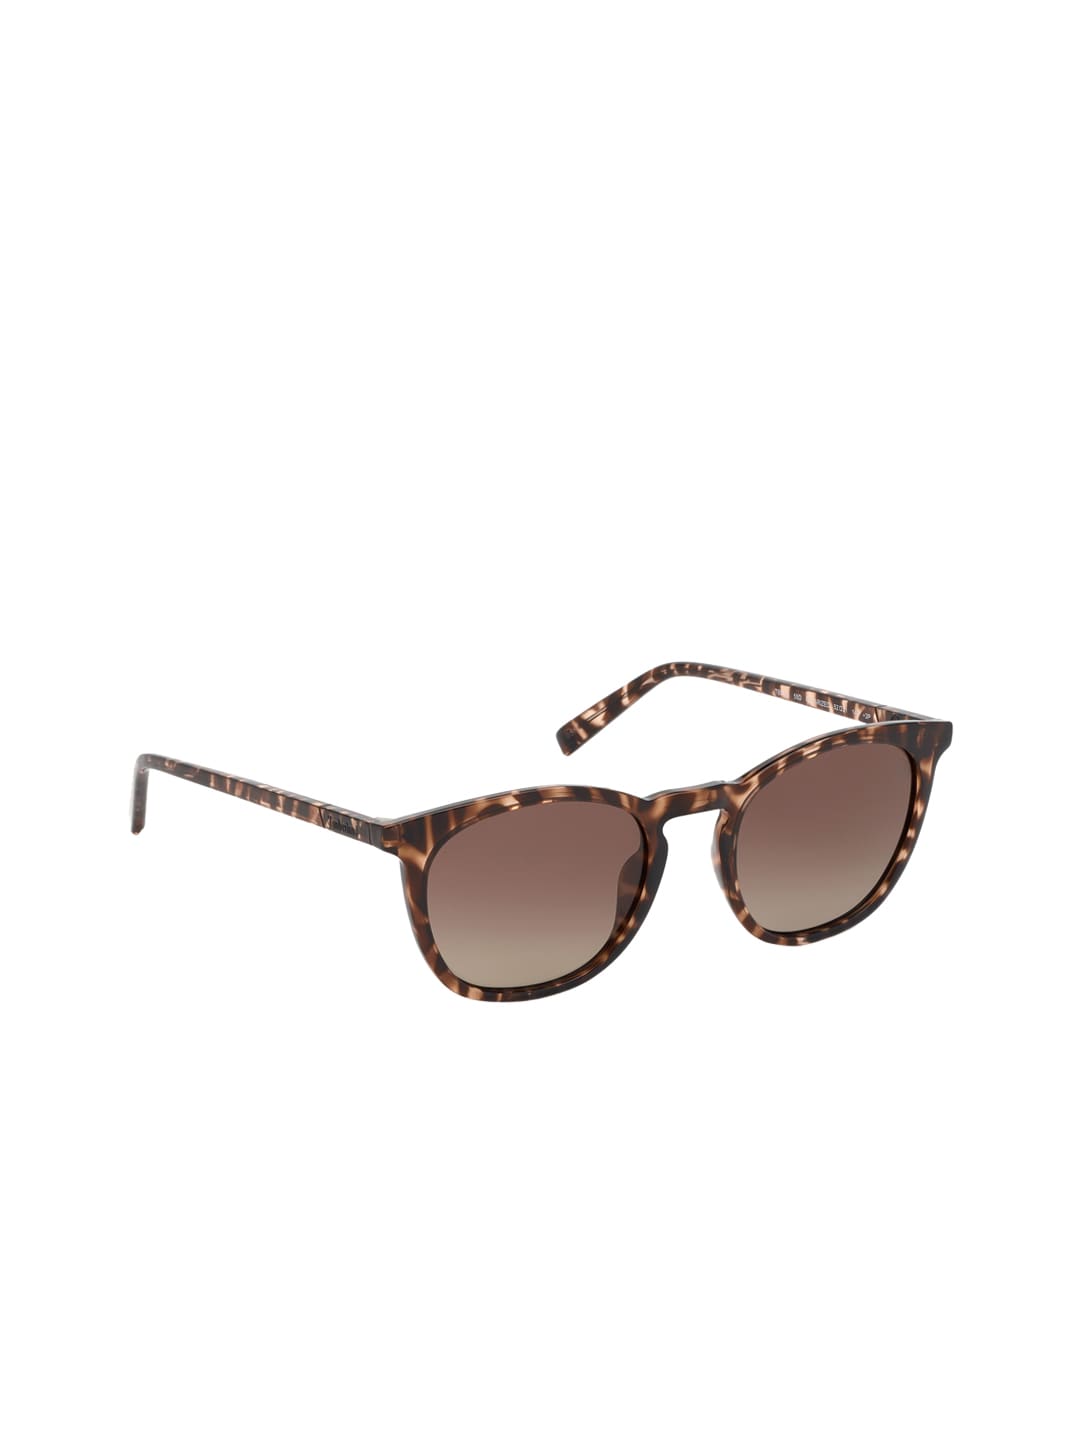 Timberland - Sunglasses